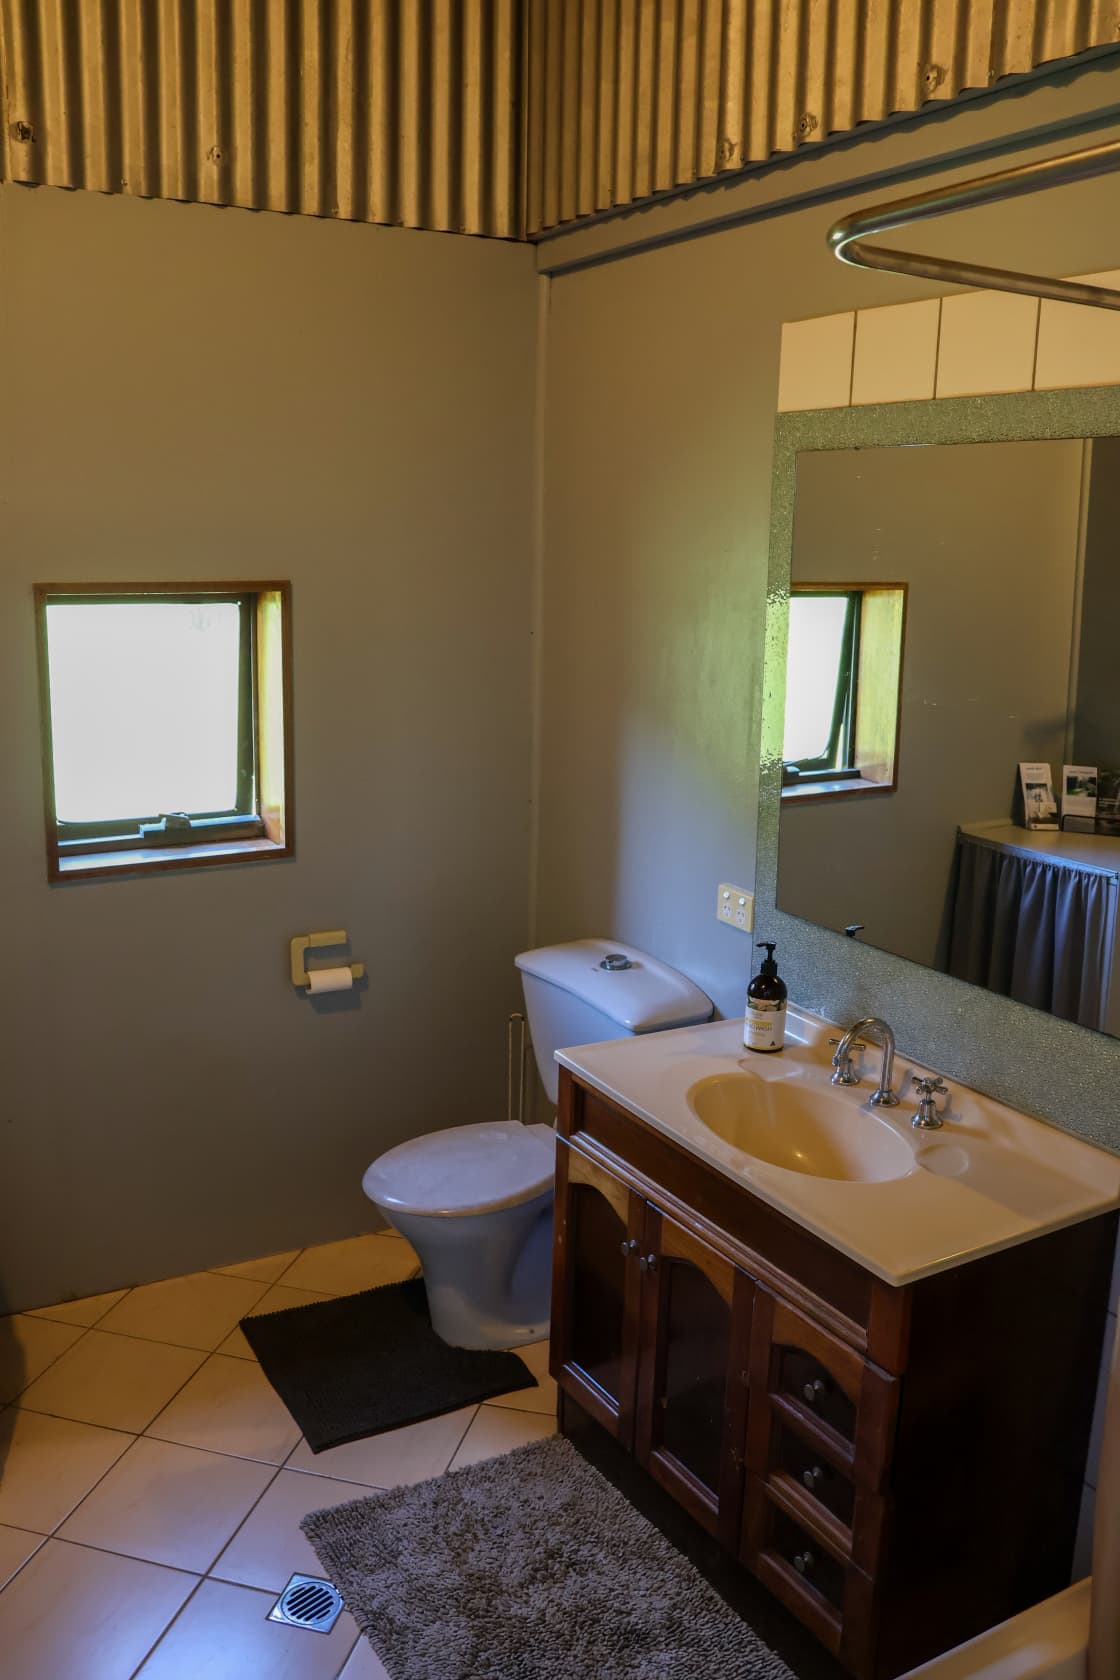 Bathroom 
📷 @the.galapagos.life